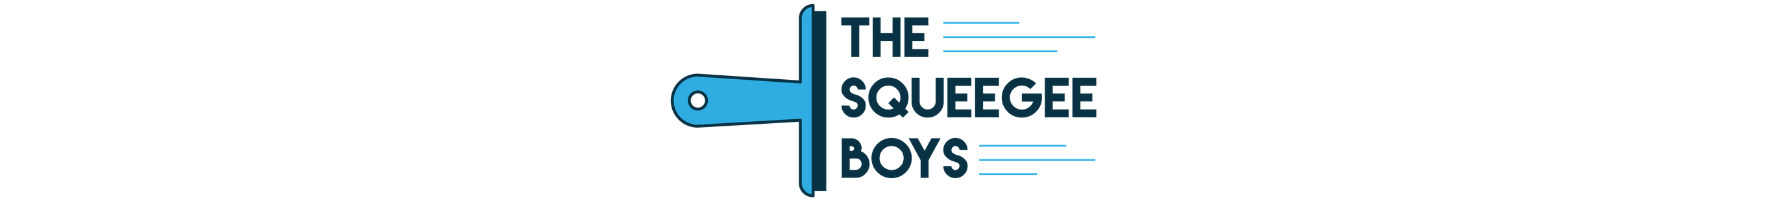 The Squeegee Boys logo